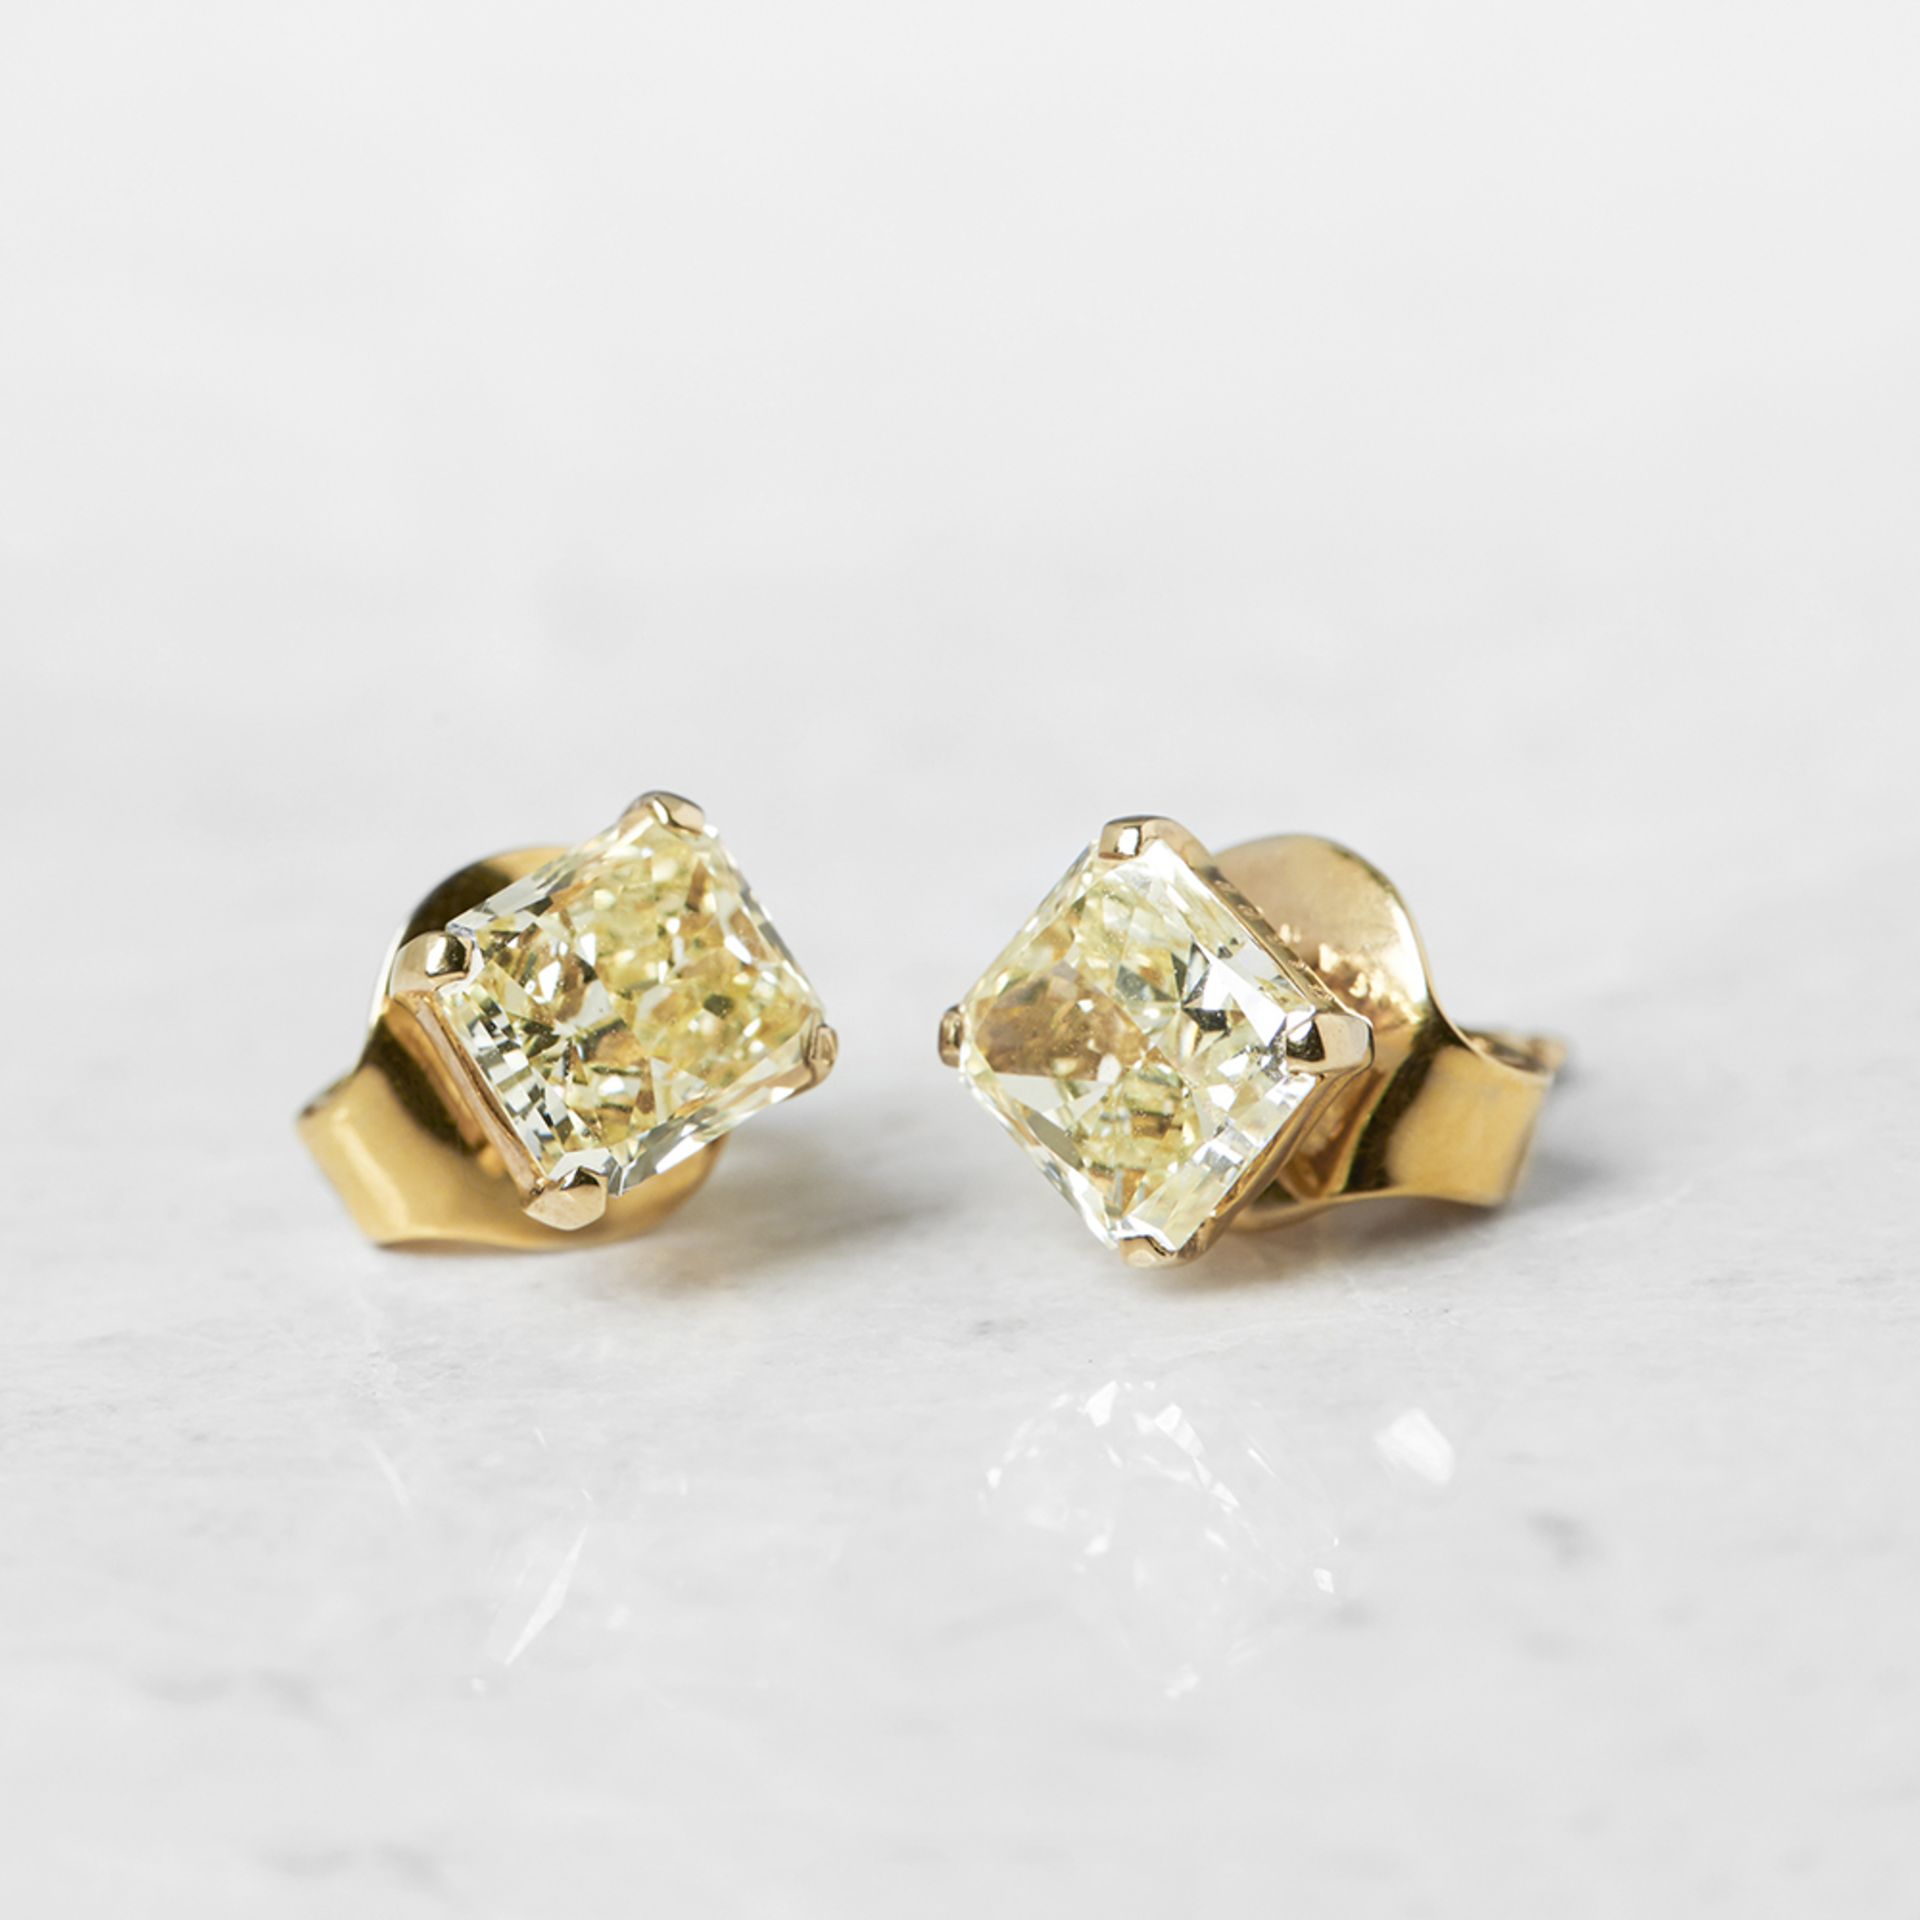 Graff Diamonds 18k Yellow Gold 2.66ct Yellow Diamond Stud Earrings with GIA Certification - Image 3 of 15